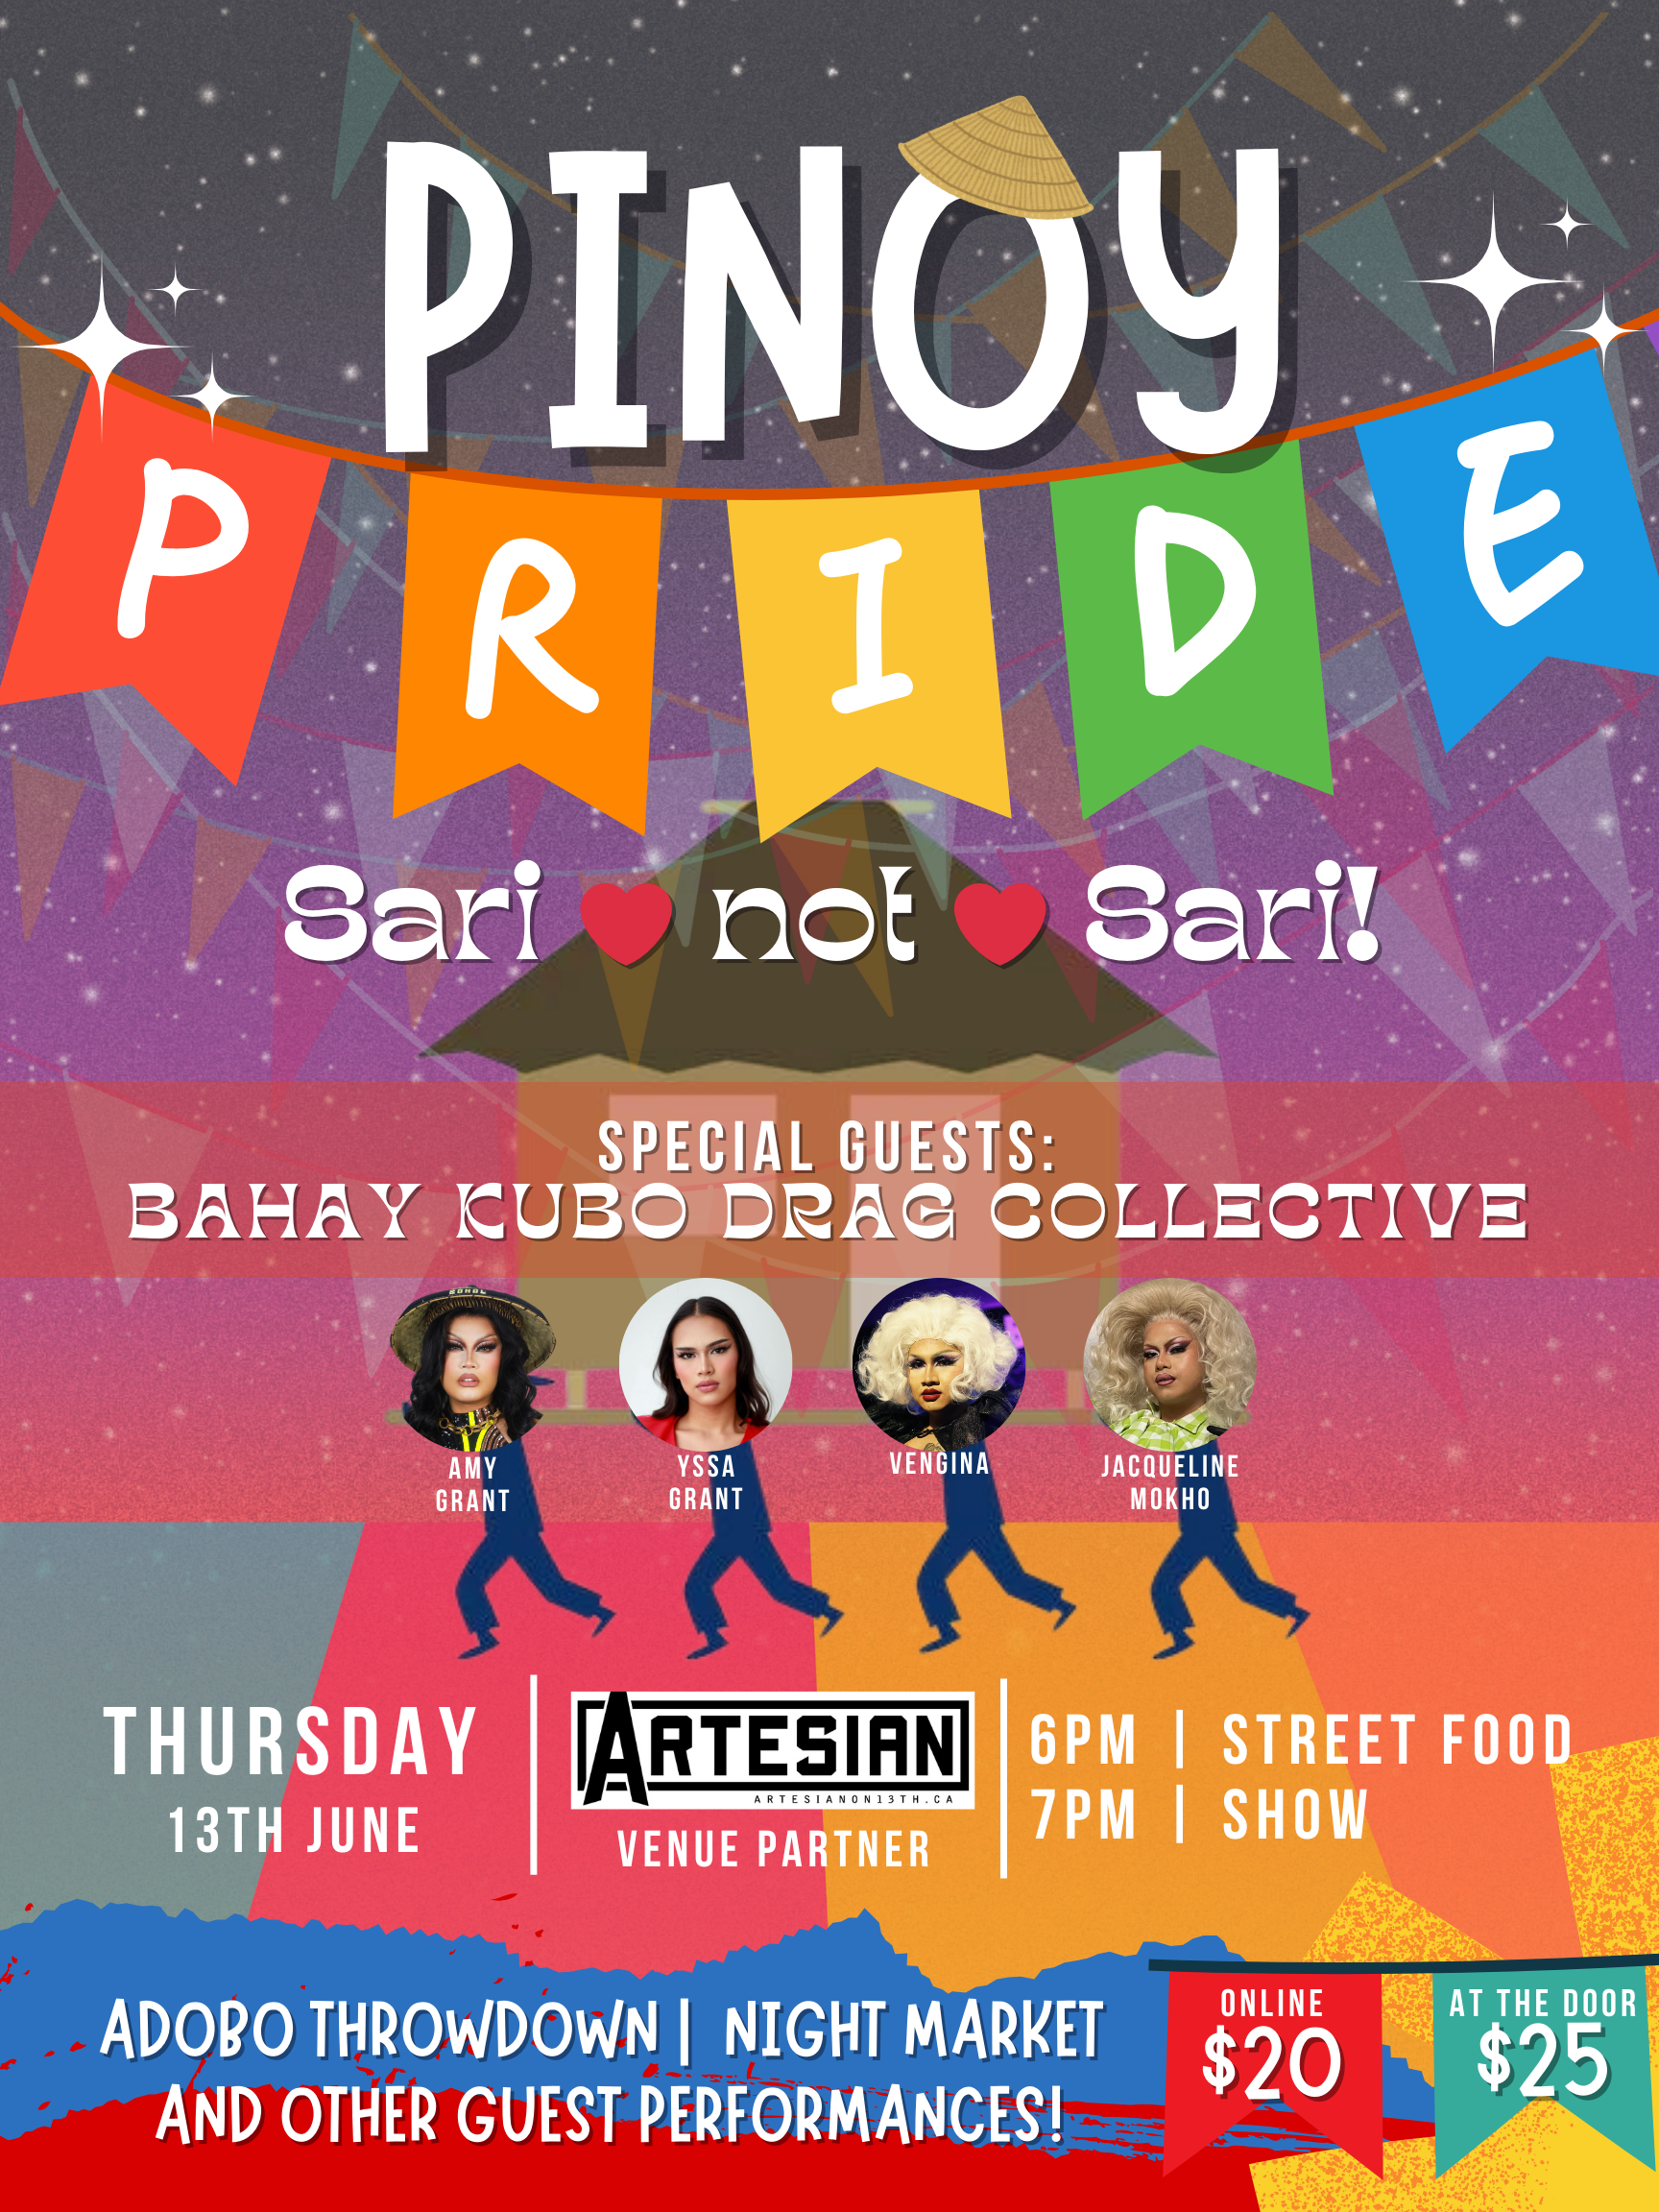 Pinoy Pride: Sari not sari! With Special Guests Bahay Kubo